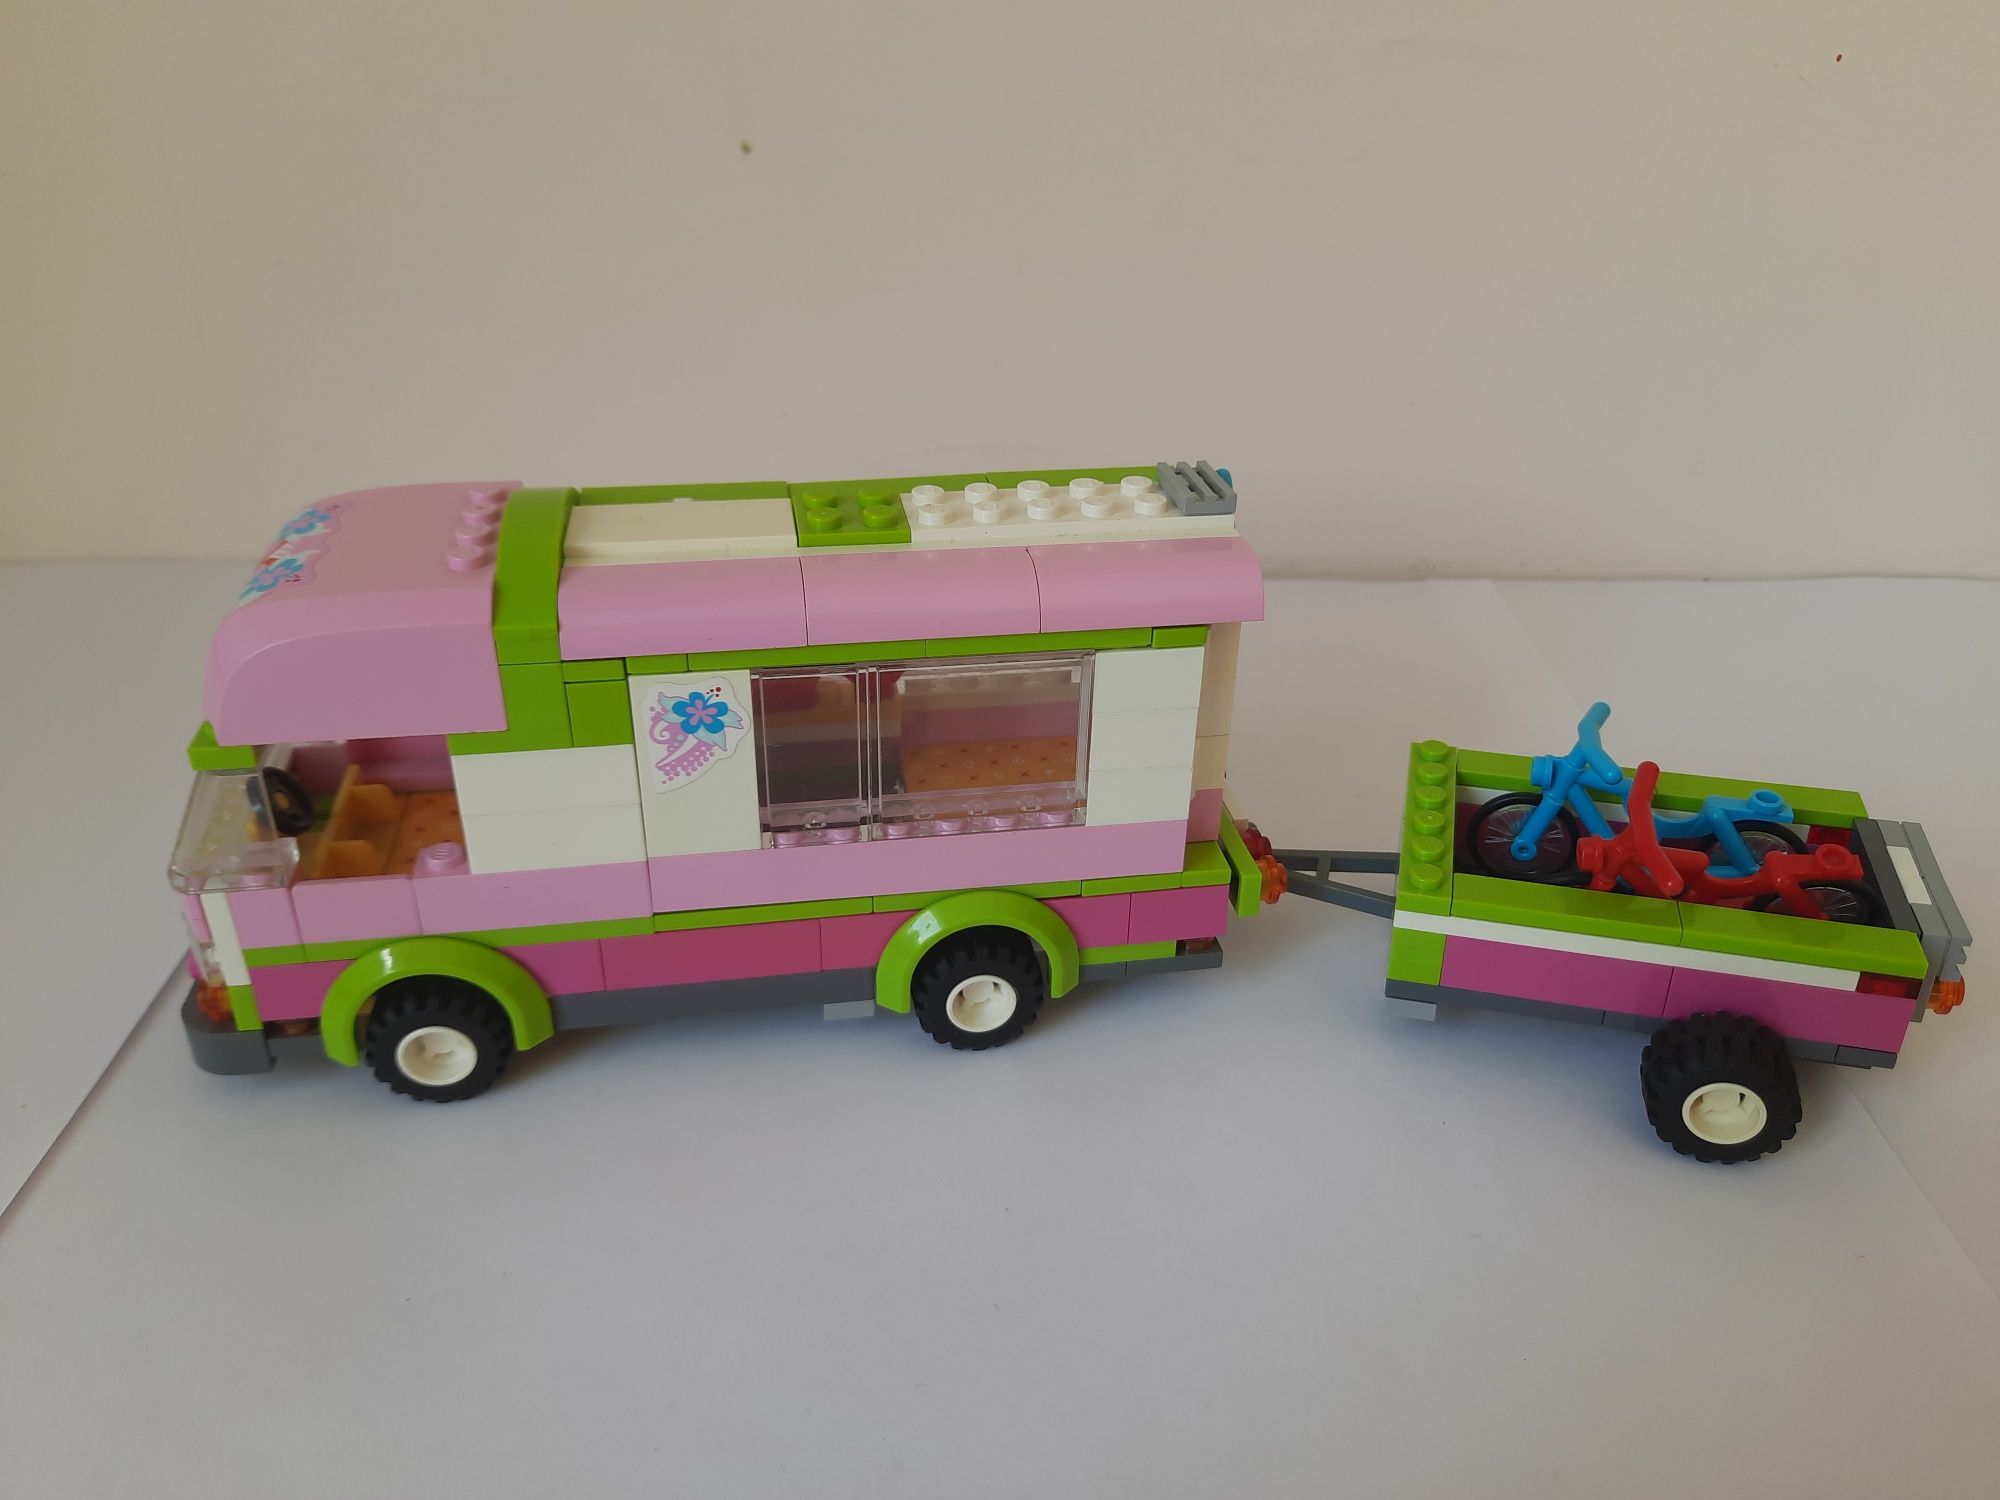 Lego Friends 3184 Samochód kempingowy + GRATIS